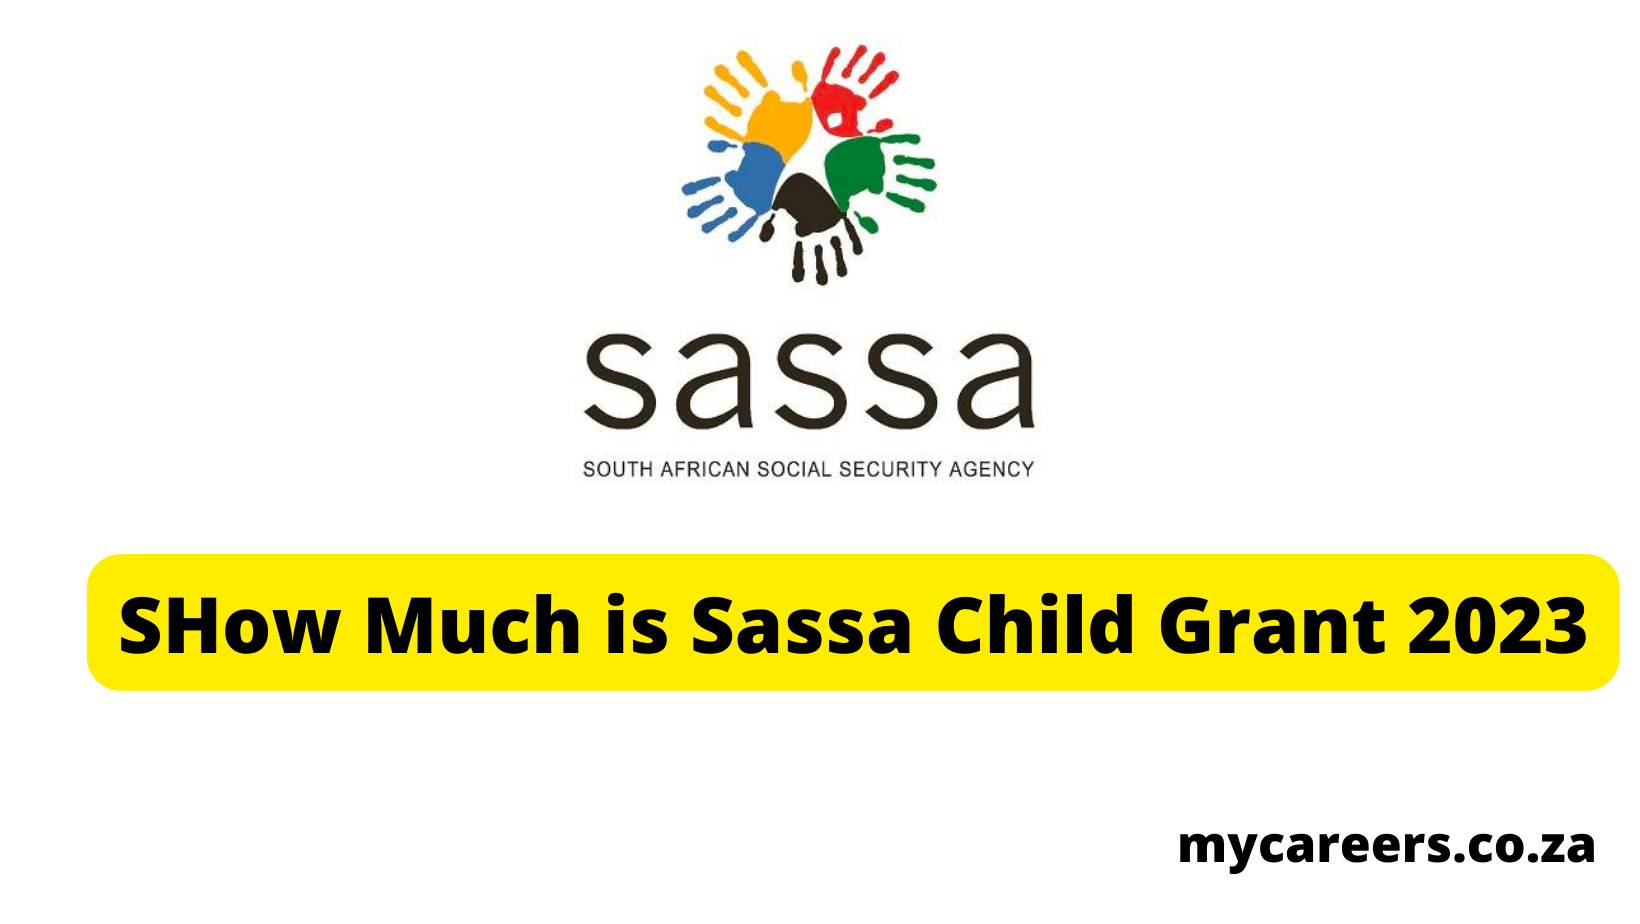 How Much is Sassa Child Grant 2023